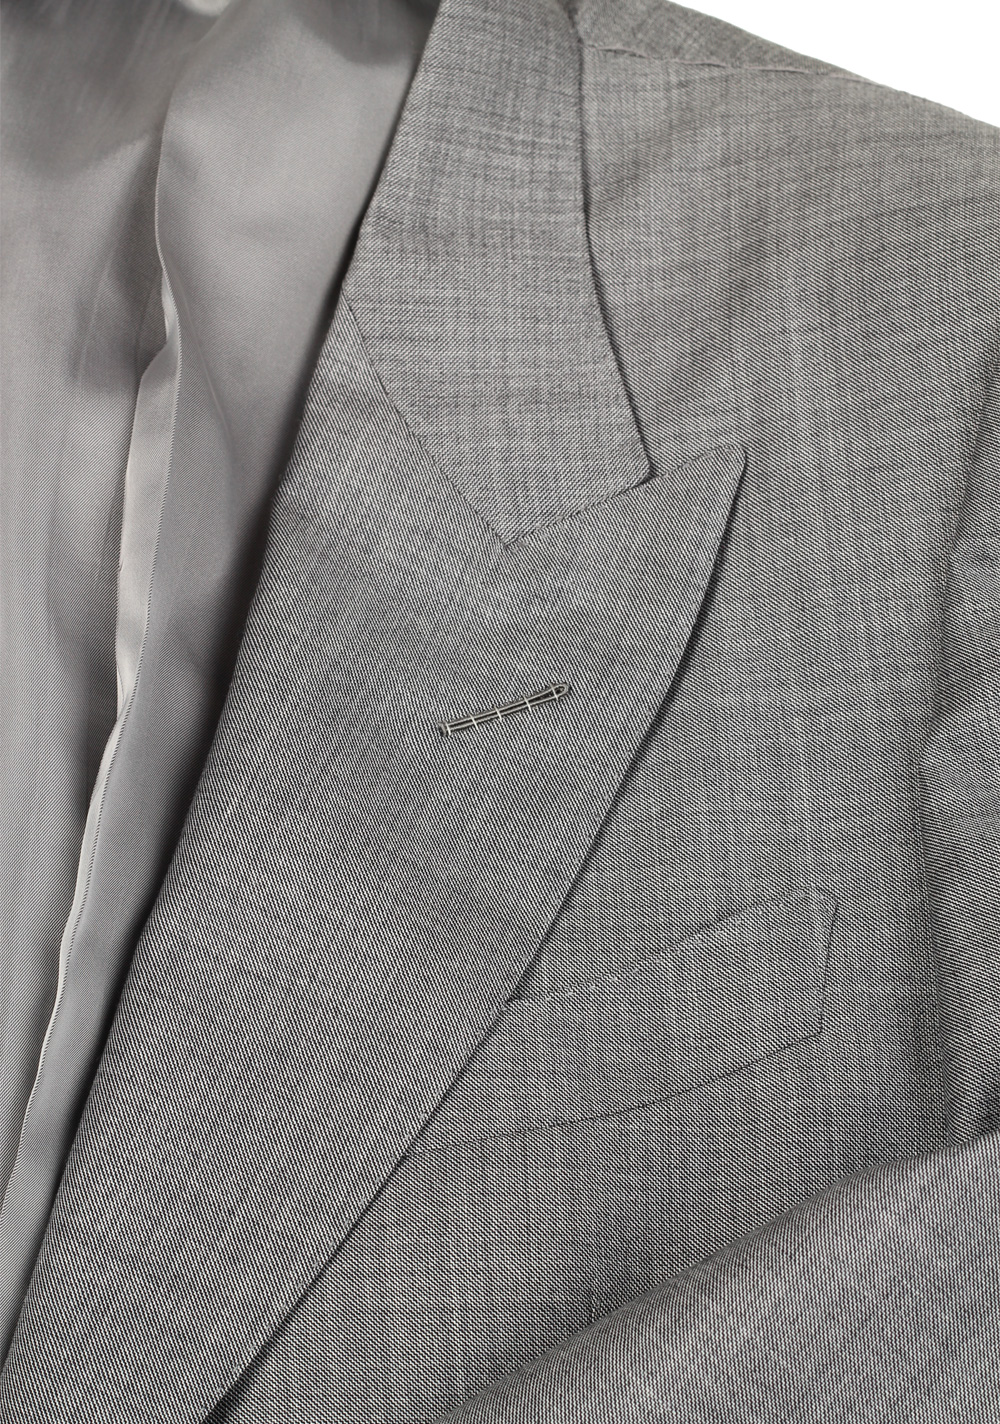 TOM FORD Shelton Sharkskin Light Gray Suit Size 50 / 40R U.S. Wool | Costume Limité